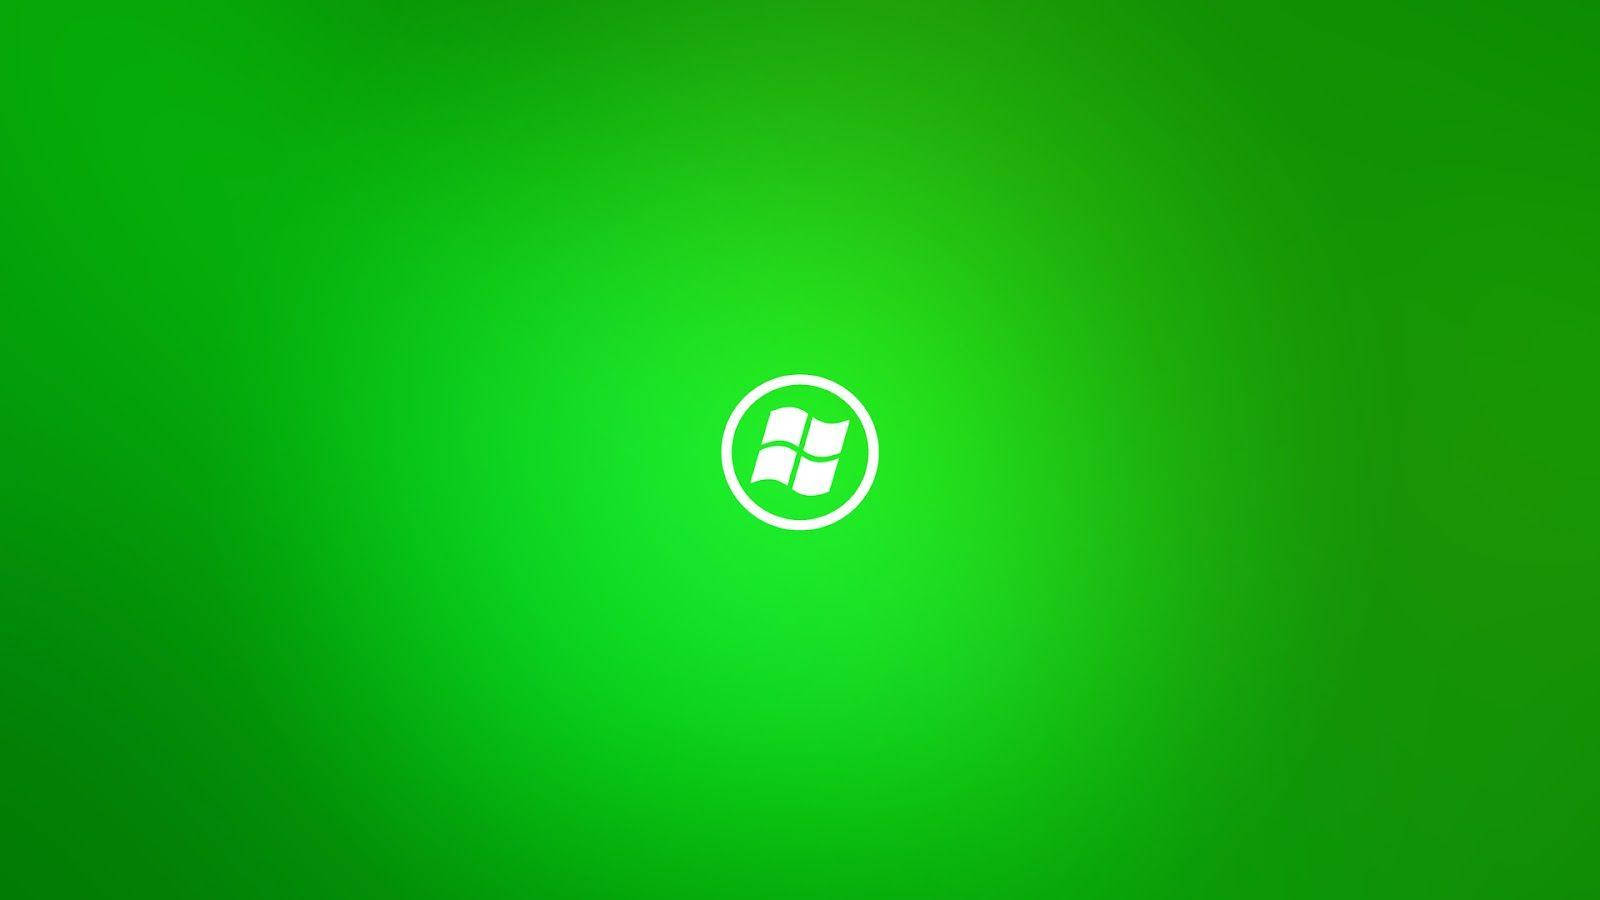 Windows 11 Plain Green Background